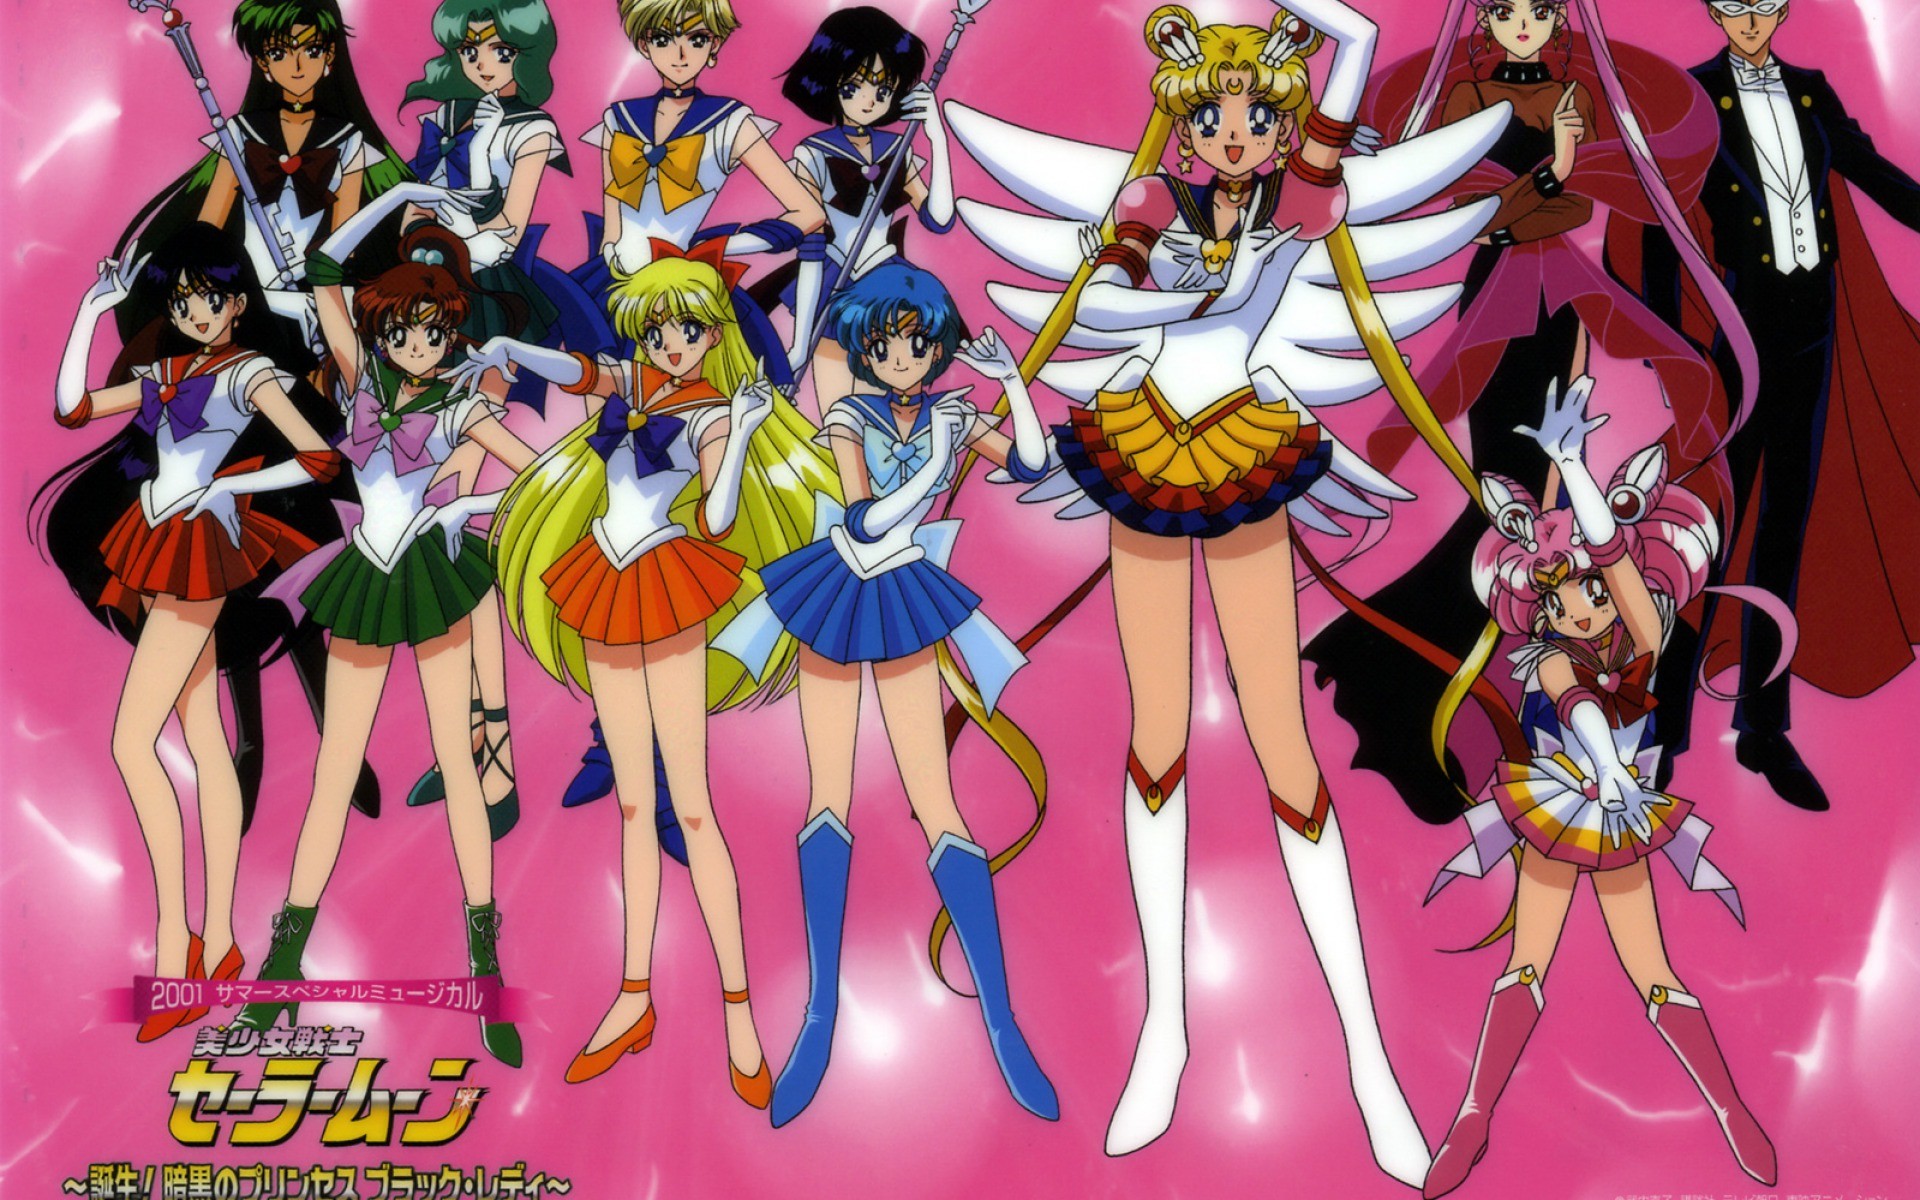 1920x1200 Sailor Moon 11 wallpapers and stock photos